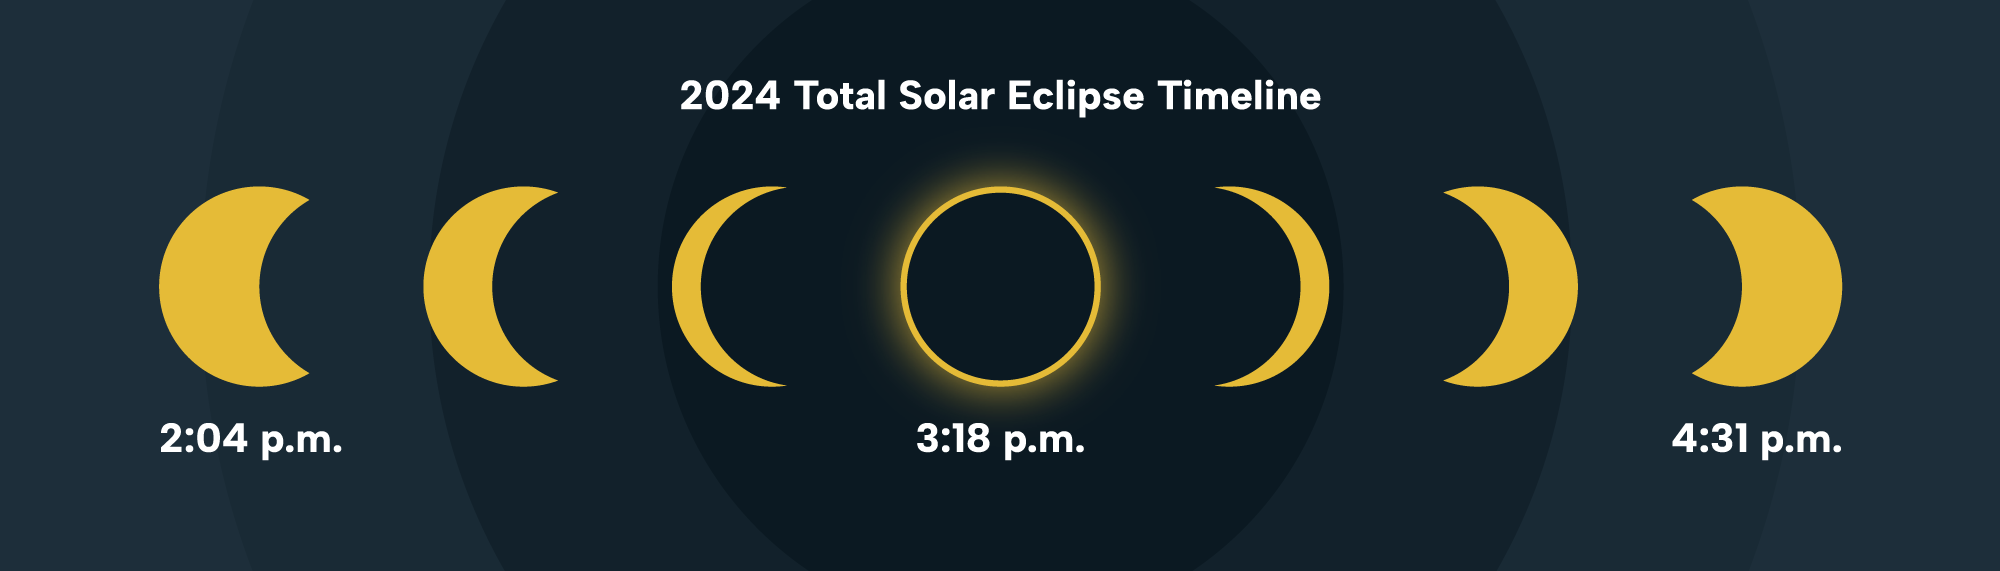 timeline of eclipse